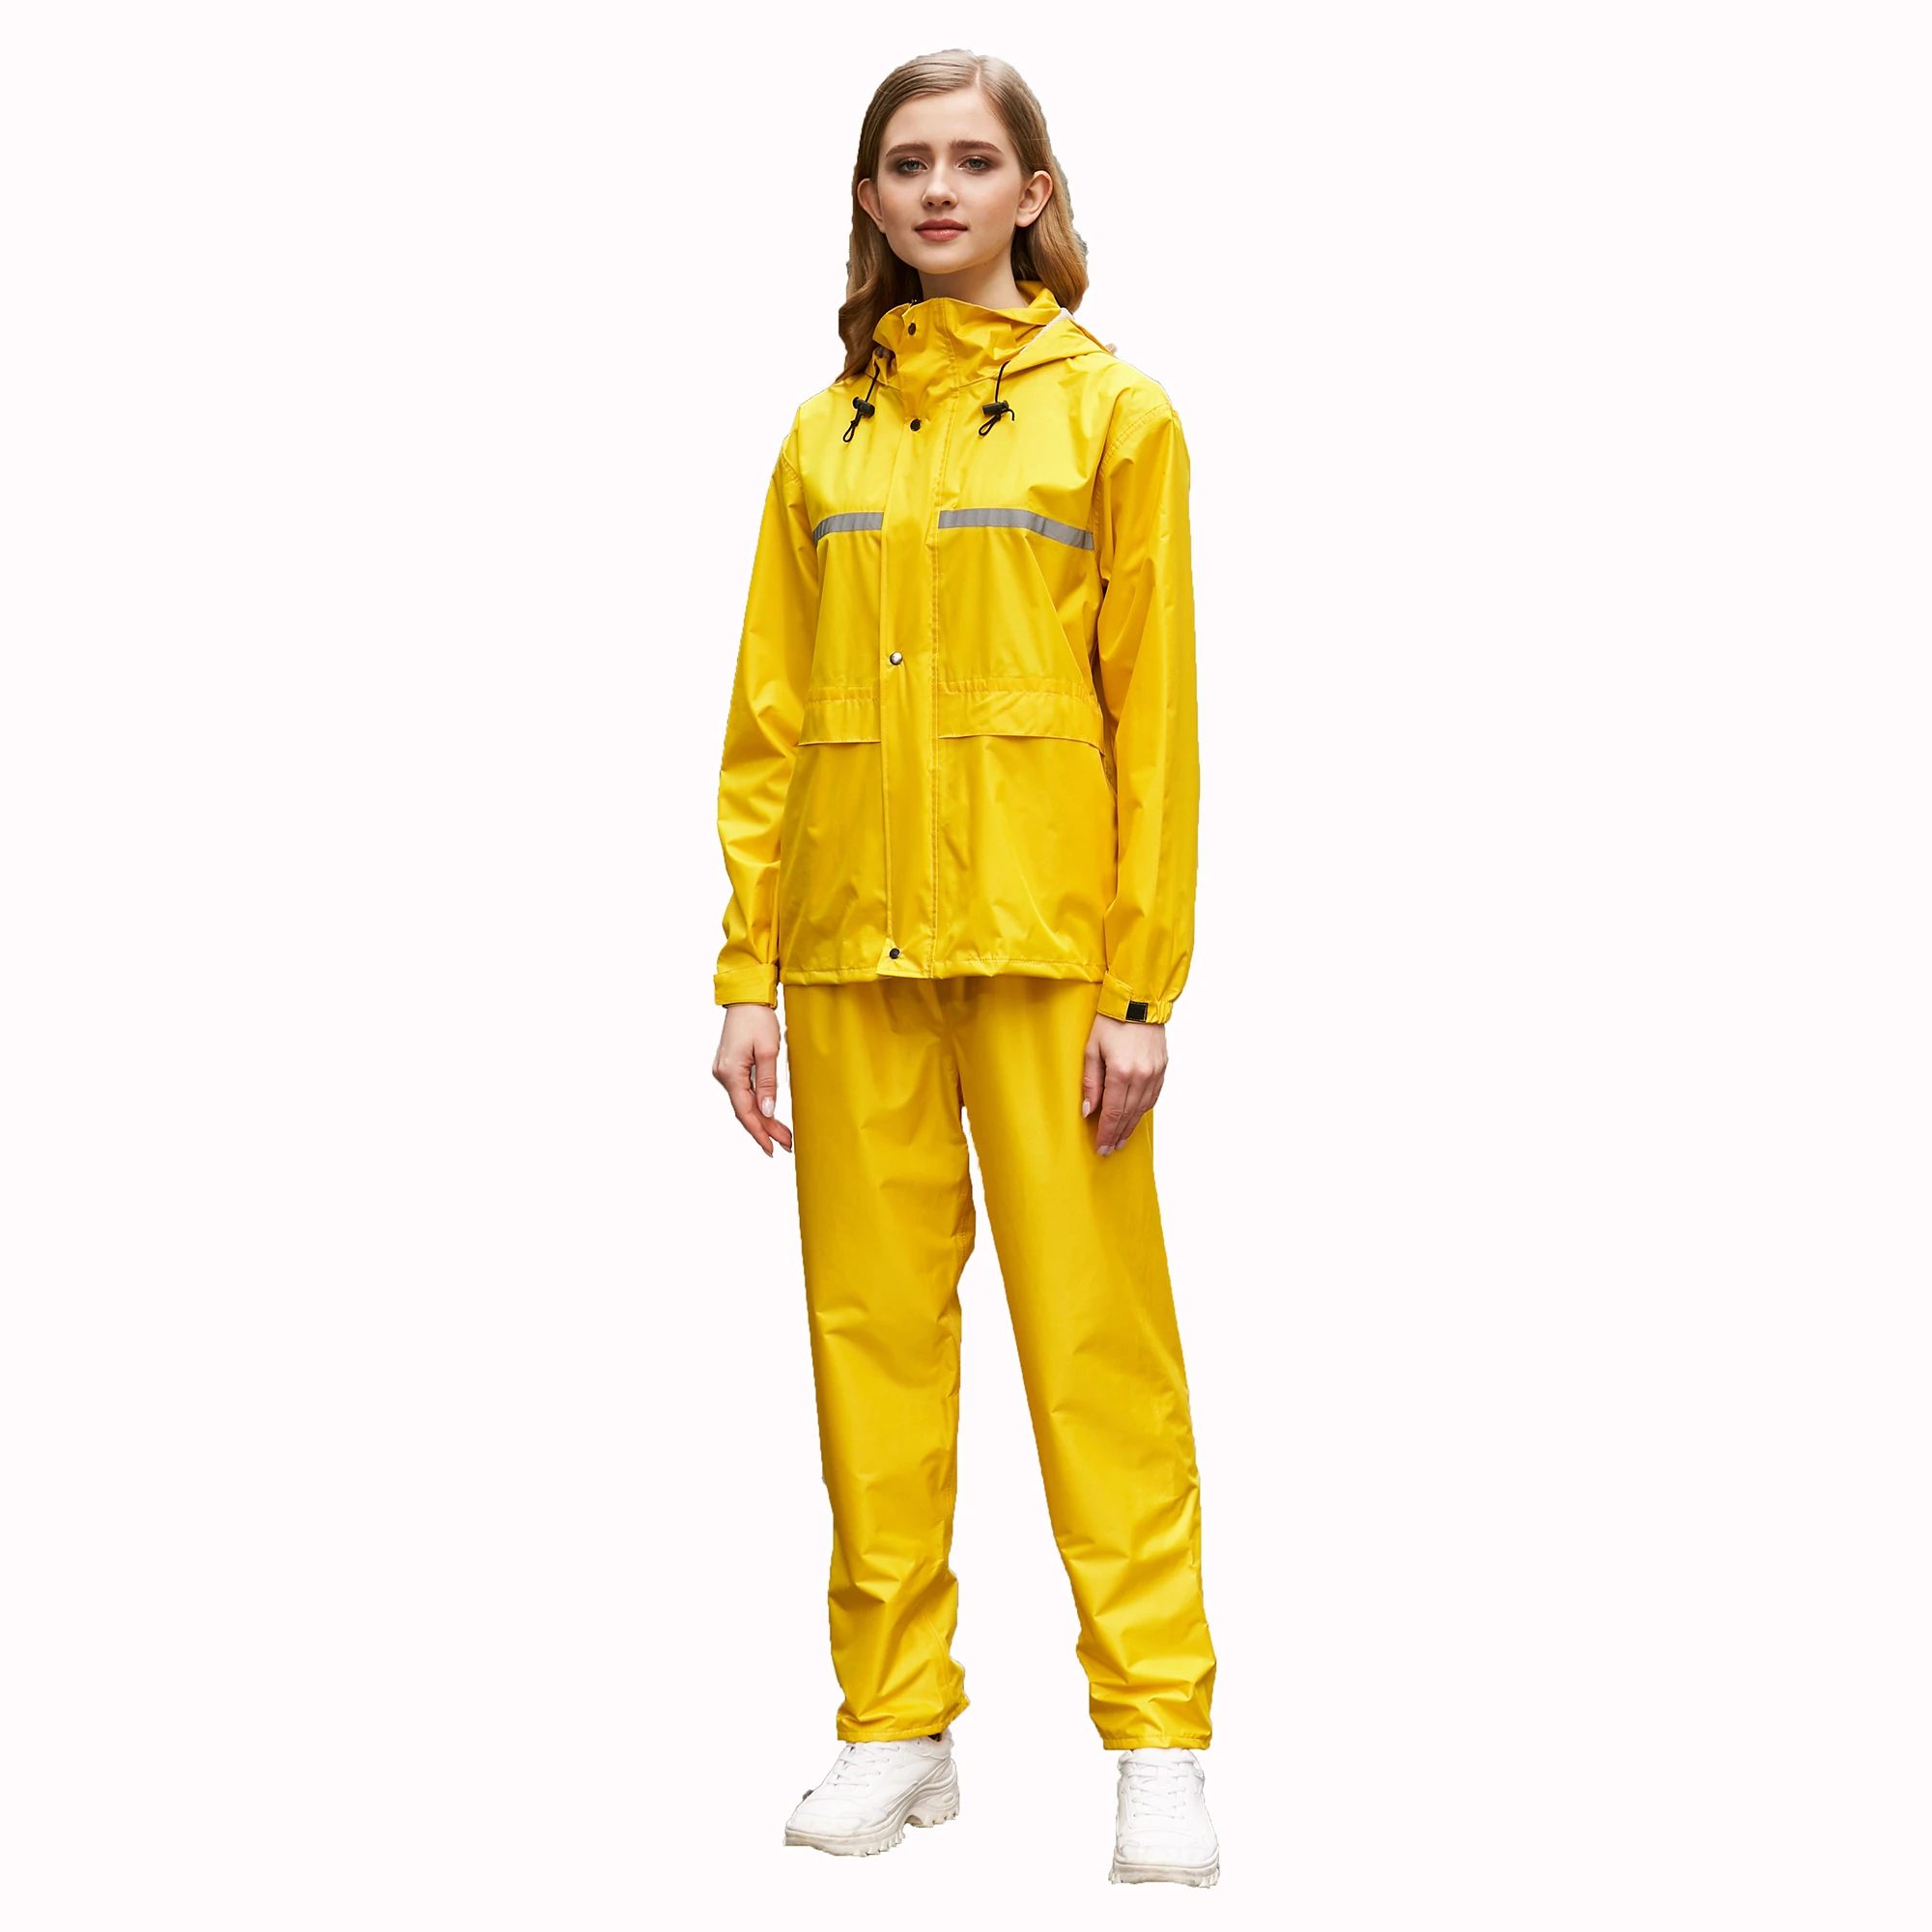 Adults ropa impermeable customized rain coat raincoat waterproof